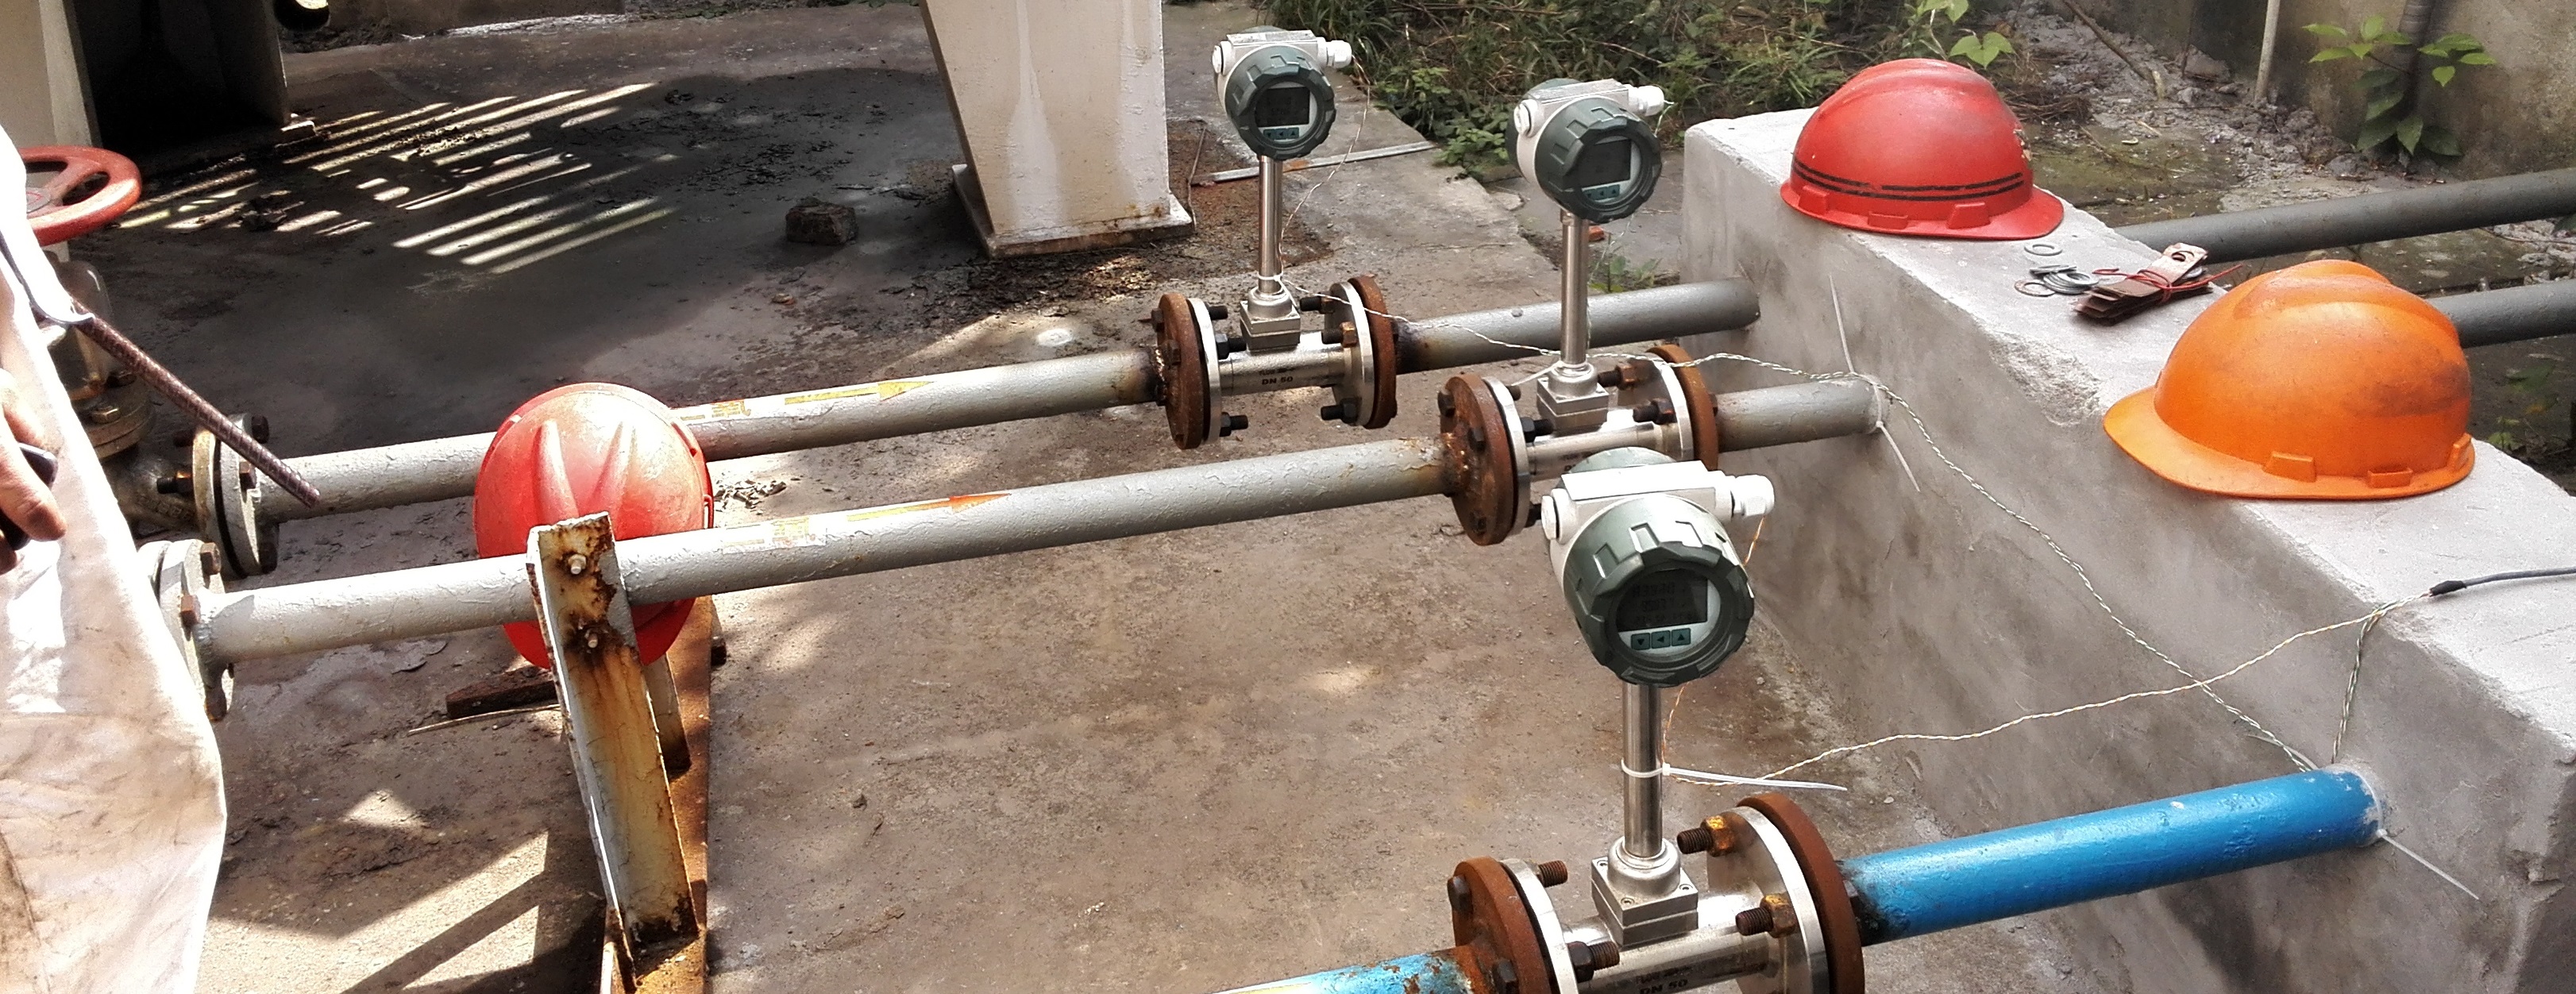 Vortex Flow Meter for Industrial Air Flow Measurement